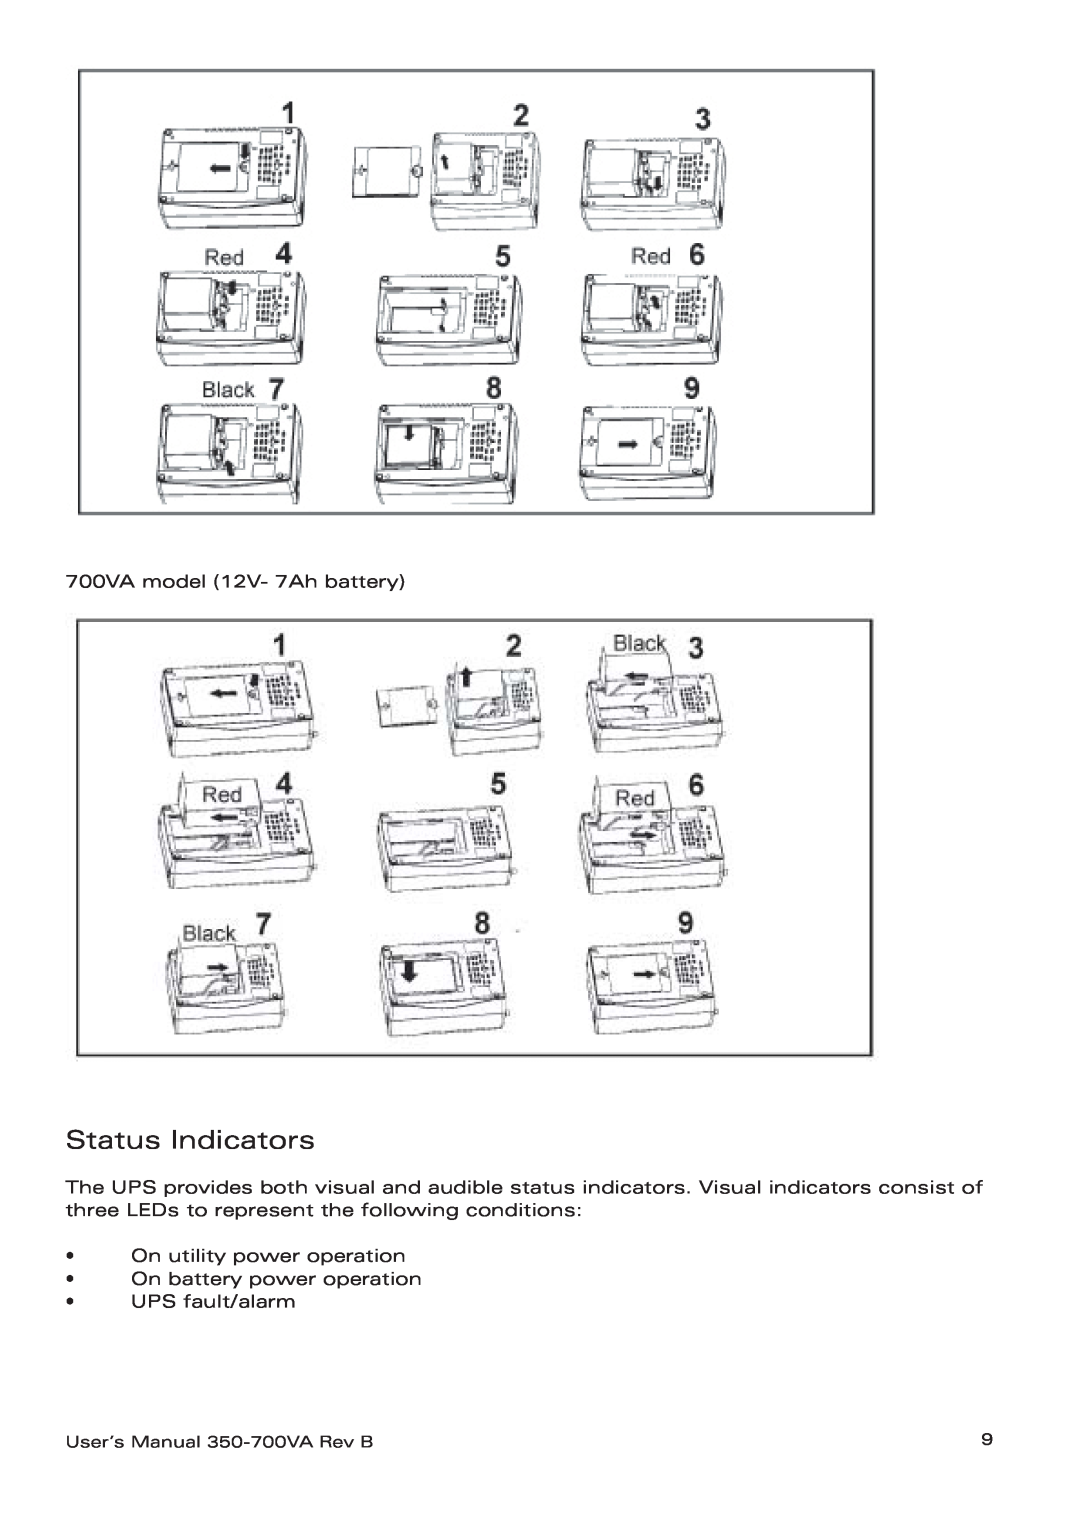 Eaton Electrical 3105 UPS manual Status Indicators, 700VA model 12V- 7Ah battery 